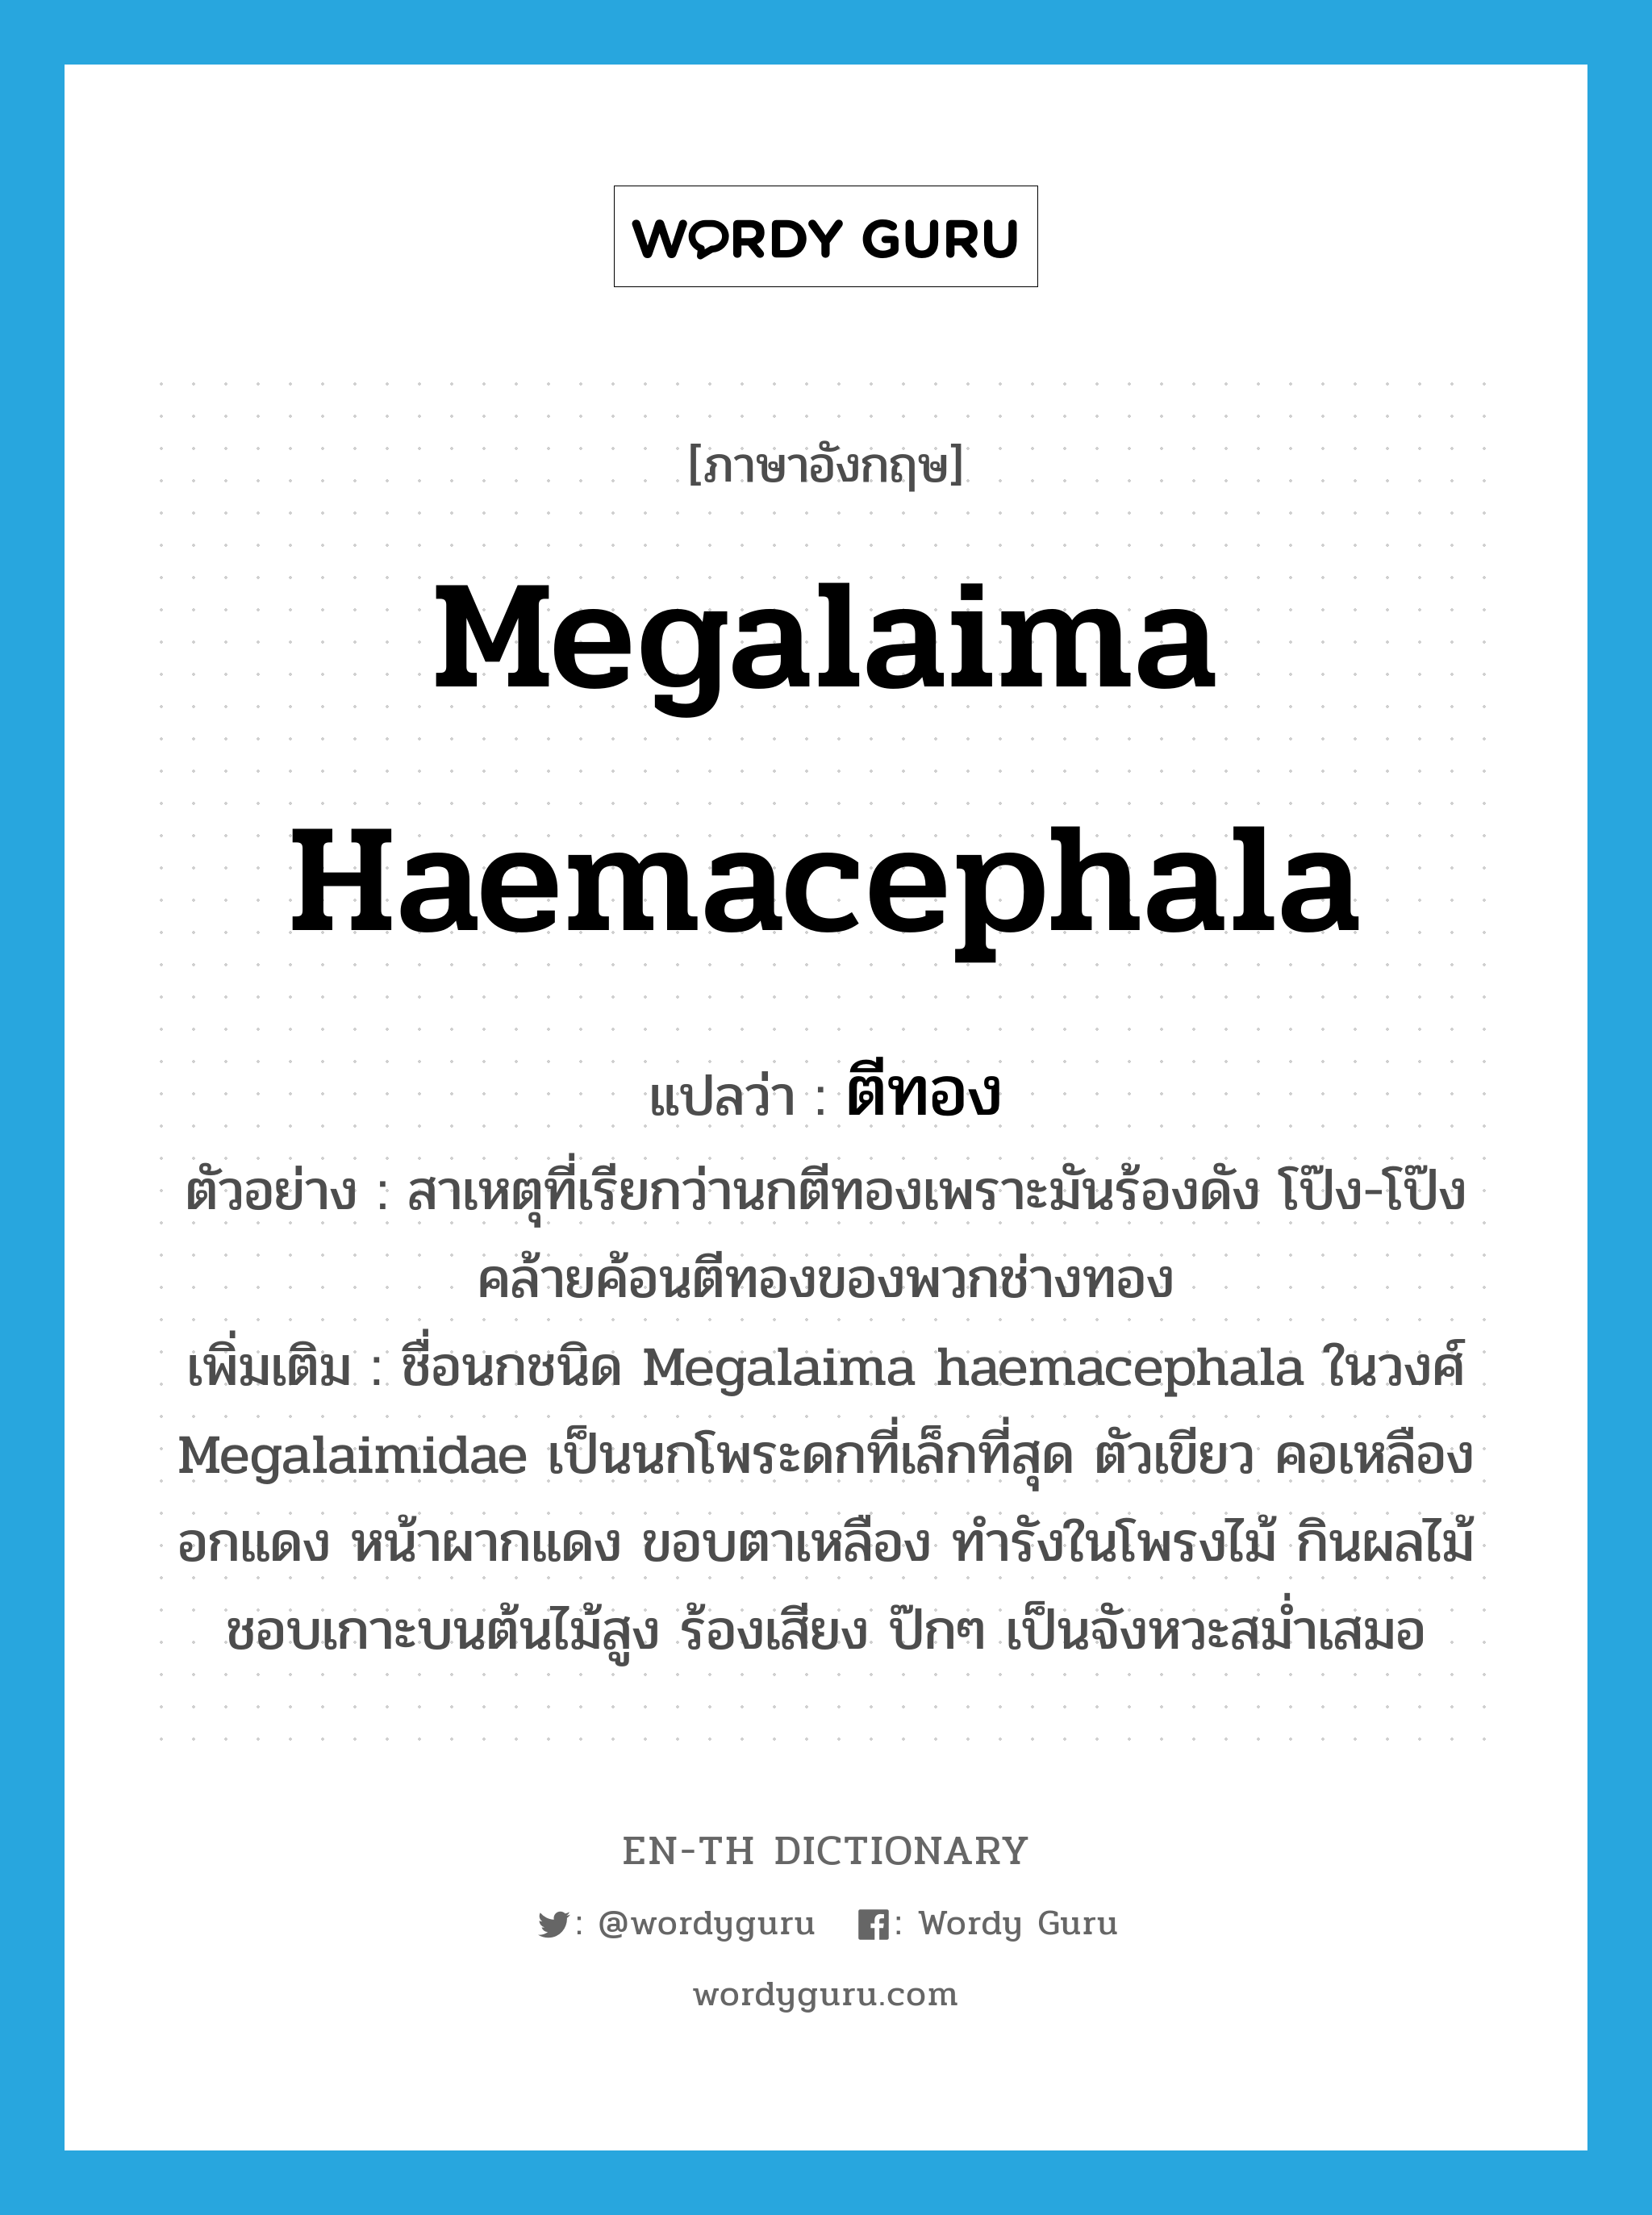 Megalaima haemacephala แปลว่า?, คำศัพท์ภาษาอังกฤษ Megalaima haemacephala แปลว่า ตีทอง ประเภท N ตัวอย่าง สาเหตุที่เรียกว่านกตีทองเพราะมันร้องดัง โป๊ง-โป๊ง คล้ายค้อนตีทองของพวกช่างทอง เพิ่มเติม ชื่อนกชนิด Megalaima haemacephala ในวงศ์ Megalaimidae เป็นนกโพระดกที่เล็กที่สุด ตัวเขียว คอเหลือง อกแดง หน้าผากแดง ขอบตาเหลือง ทำรังในโพรงไม้ กินผลไม้ ชอบเกาะบนต้นไม้สูง ร้องเสียง ป๊กๆ เป็นจังหวะสม่ำเสมอ หมวด N